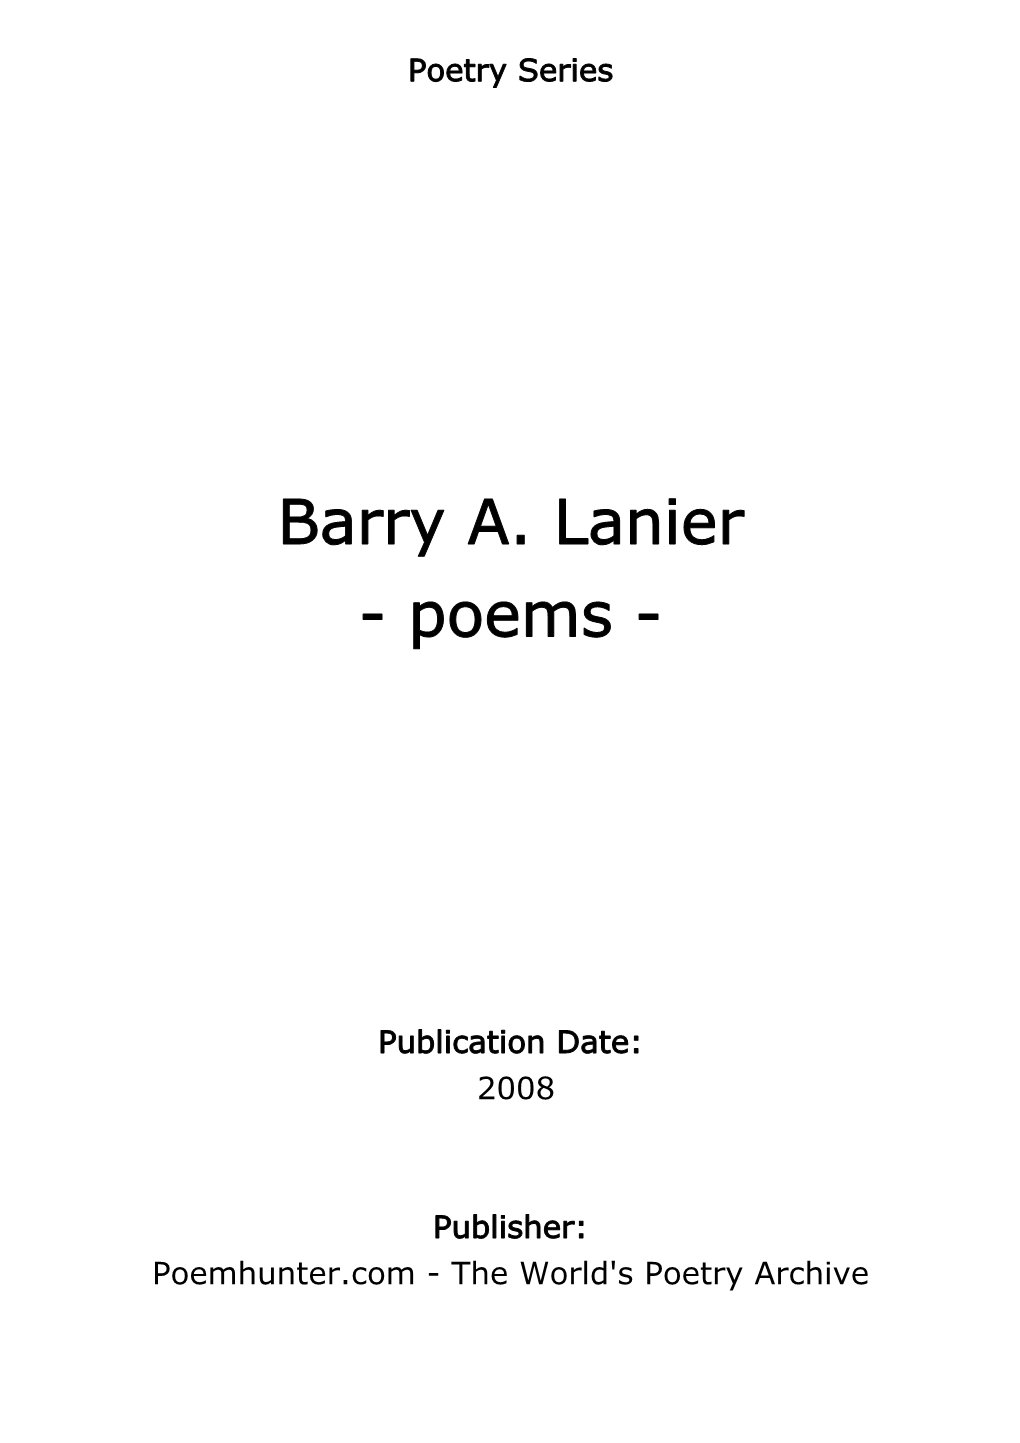 Barry A. Lanier - Poems